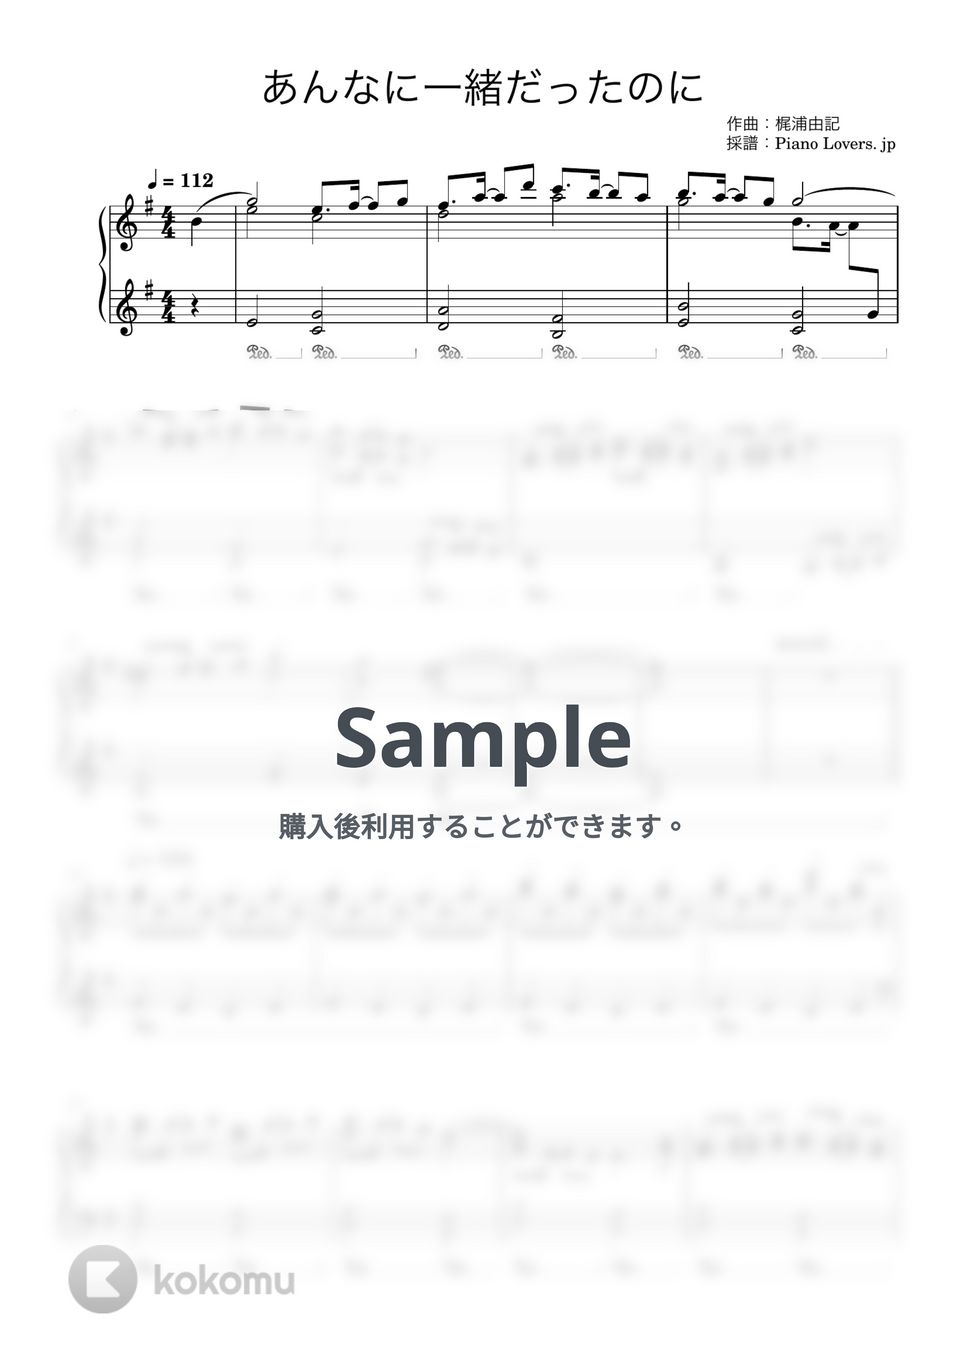 See-Saw - あんなに一緒だったのに (機動戦士ガンダムSEED / ピアノ楽譜 / 中級) by Piano Lovers. jp